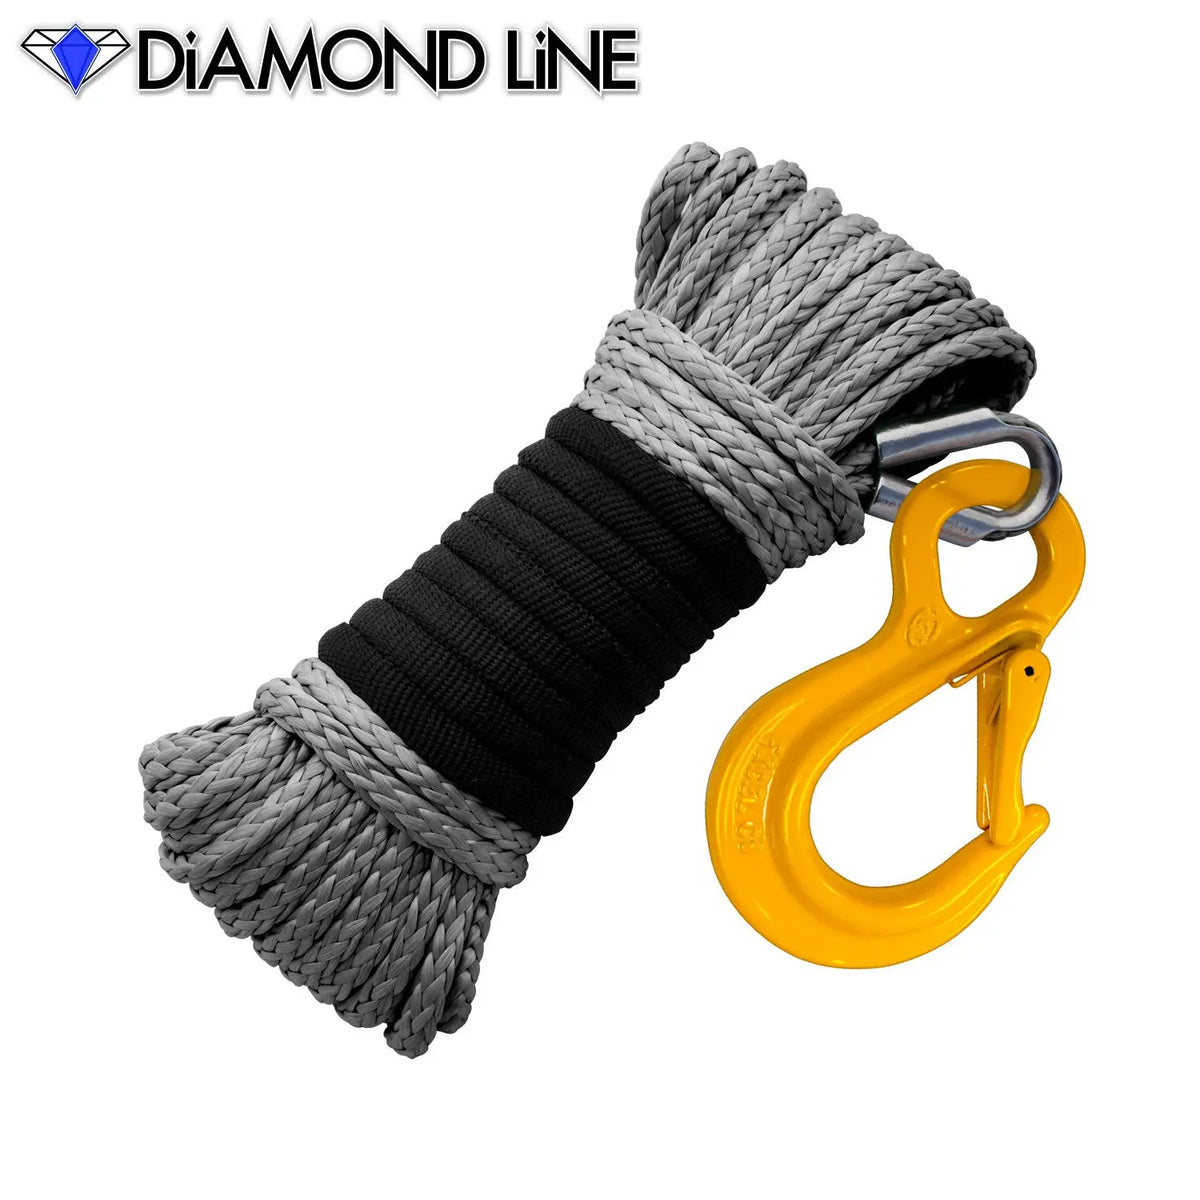 3/16" x 50' Diamond Line Winch Rope Mainline - Gray with Hook.